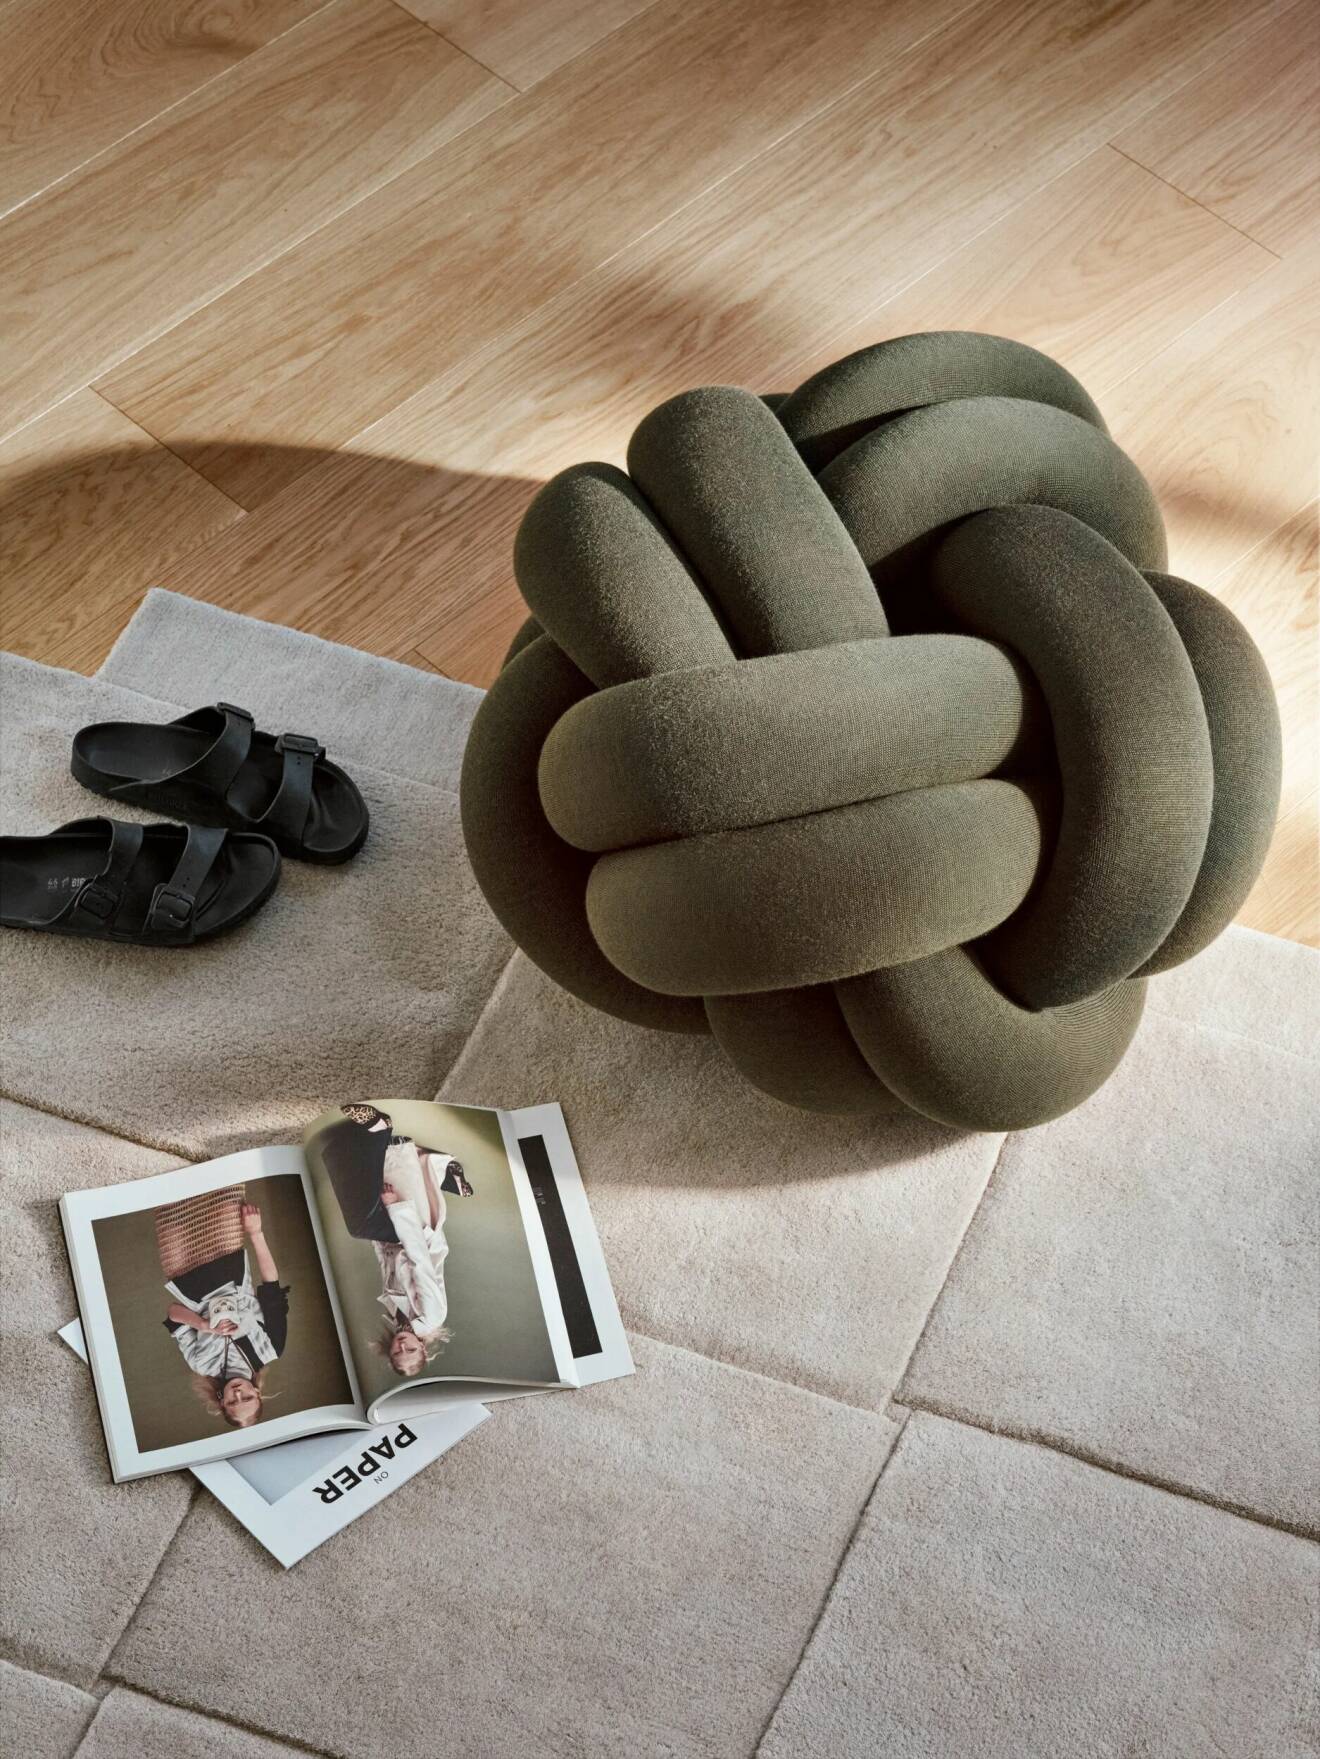 mörkgrön fotpall i modellen knot från Design House Stockholm